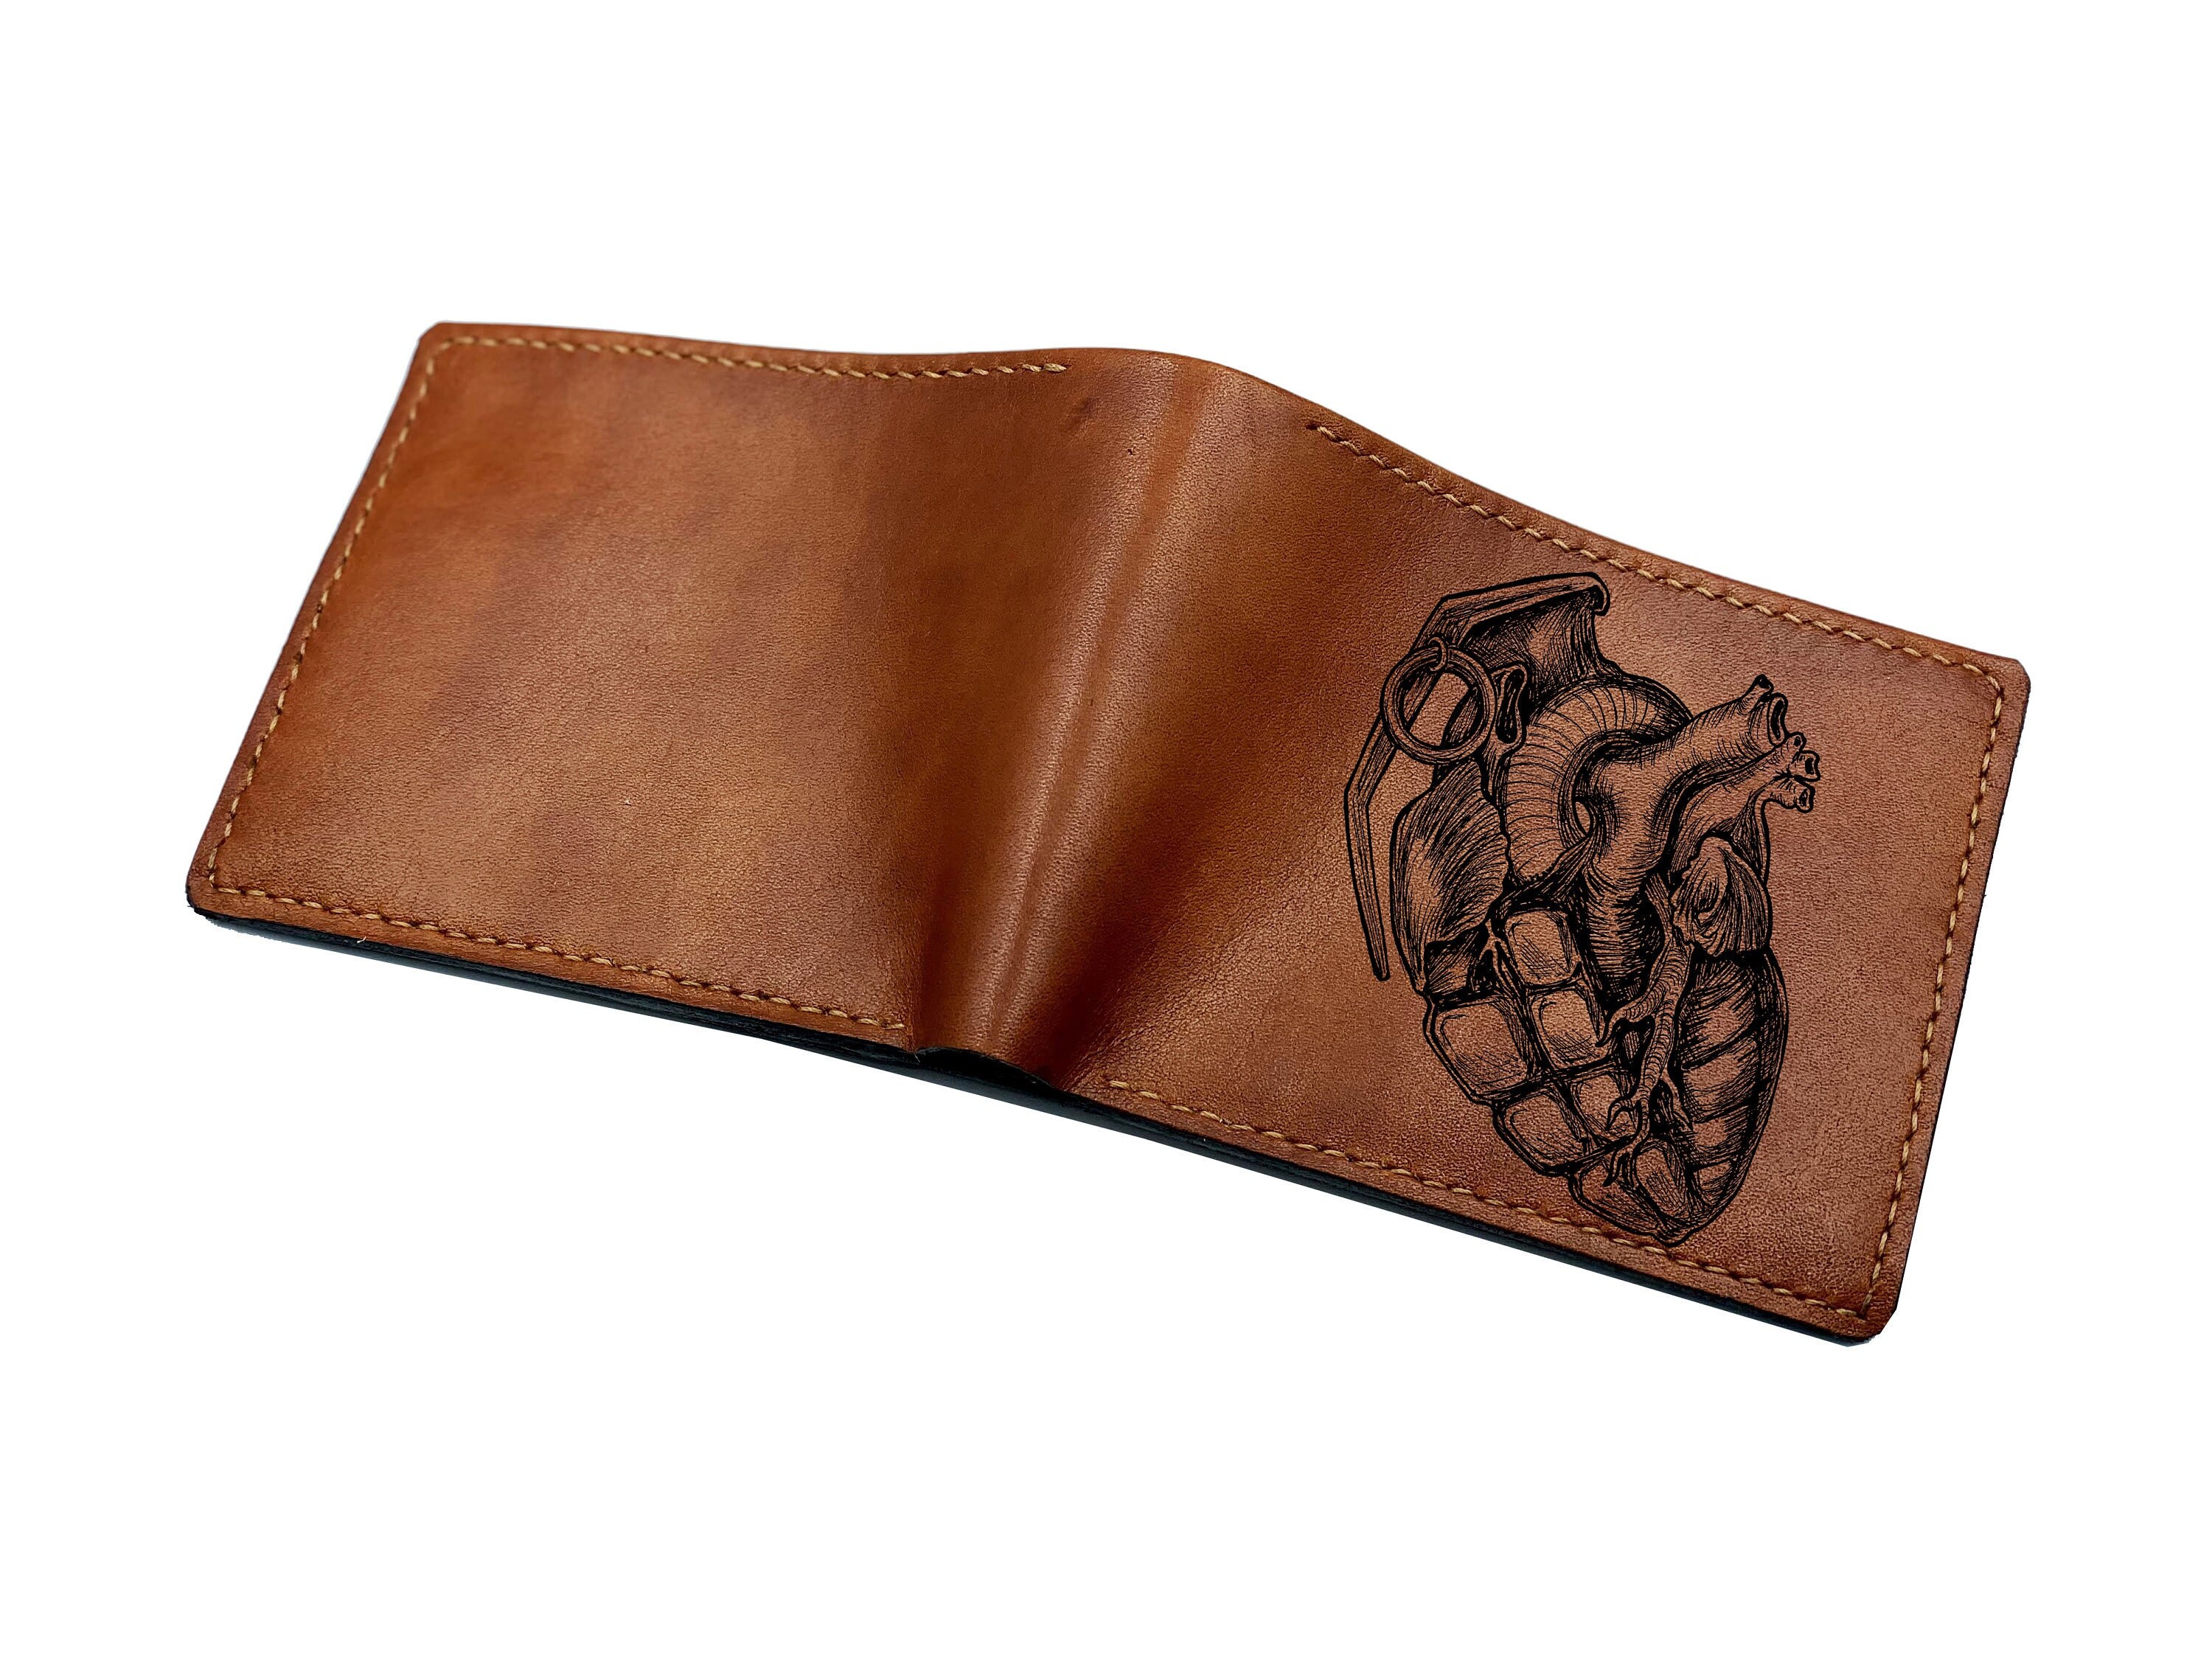  Custom Handcrafted Premium Genuine Leather